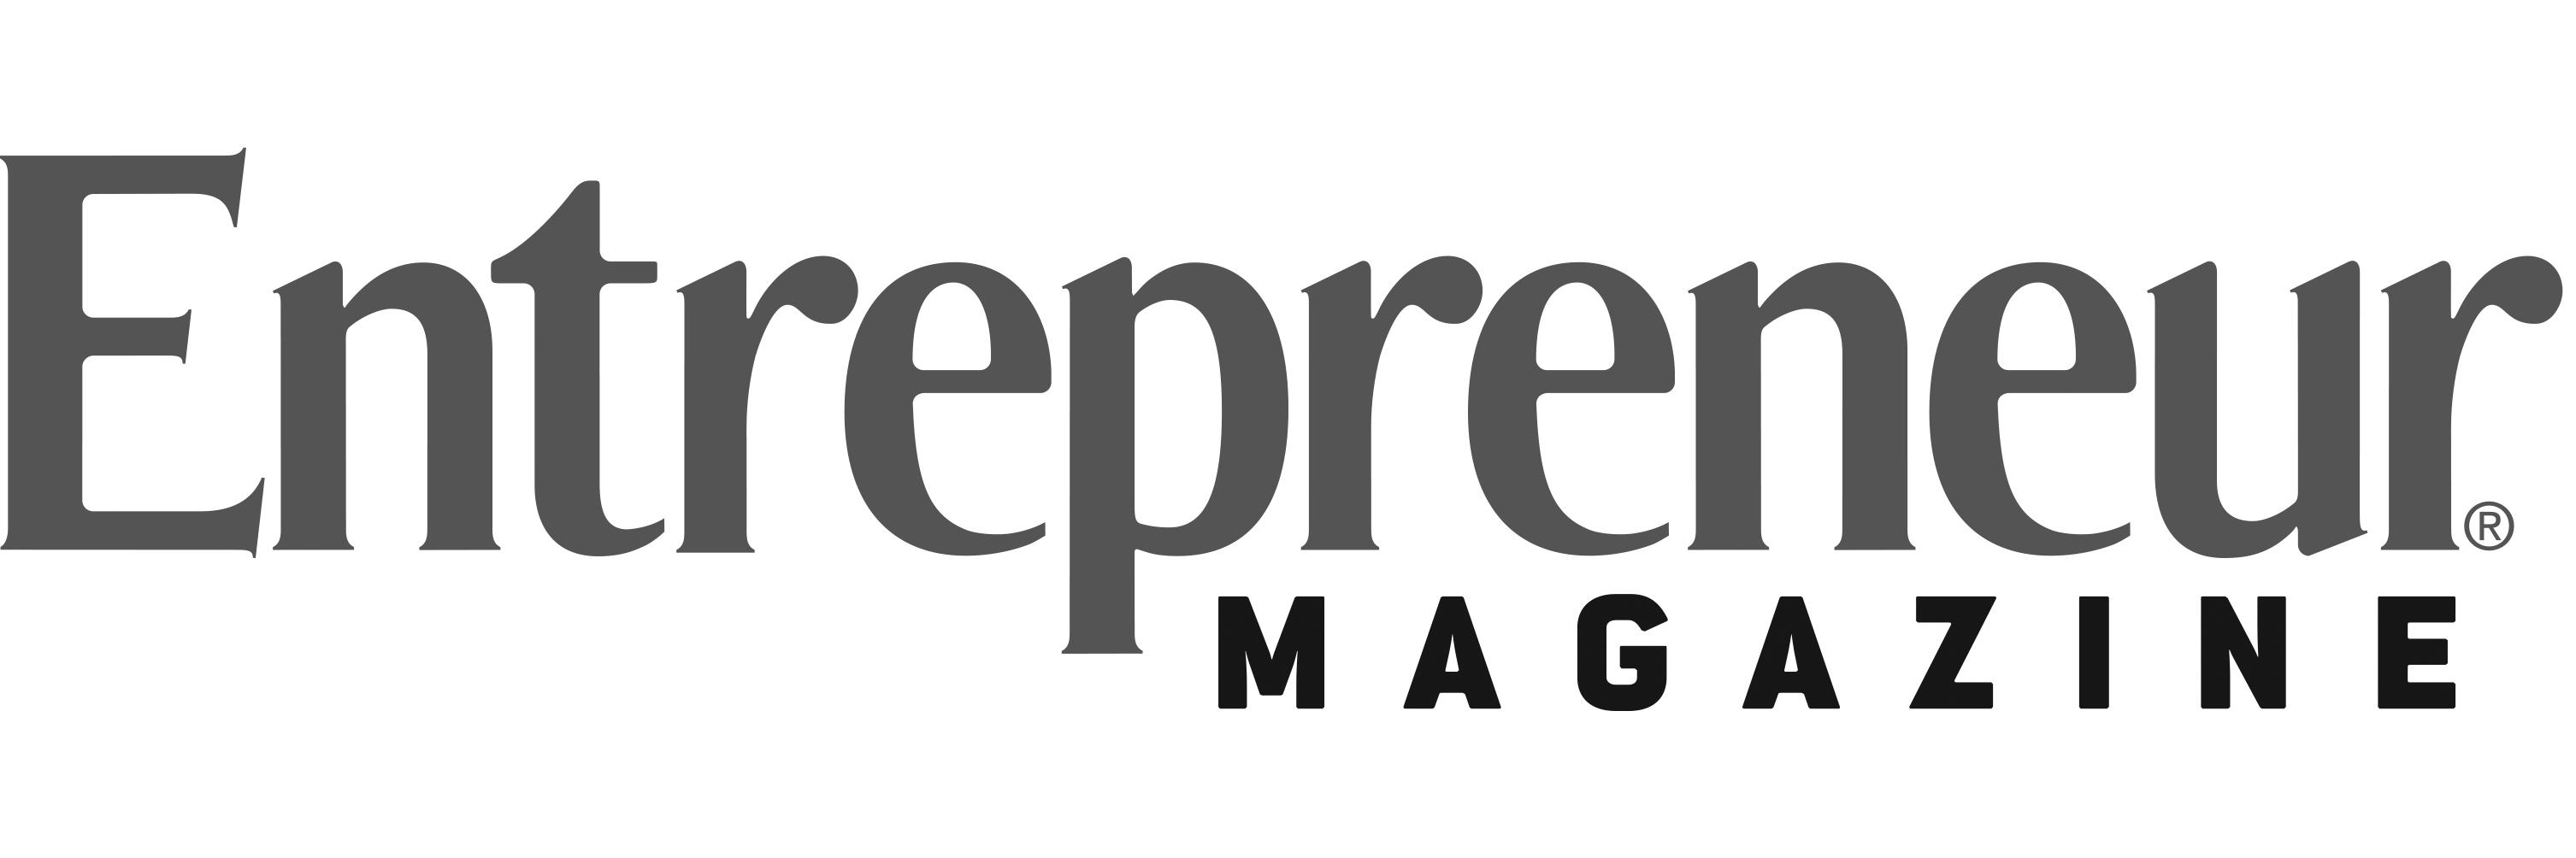 Entrepreneur Logo - entrepreneur magazine logo